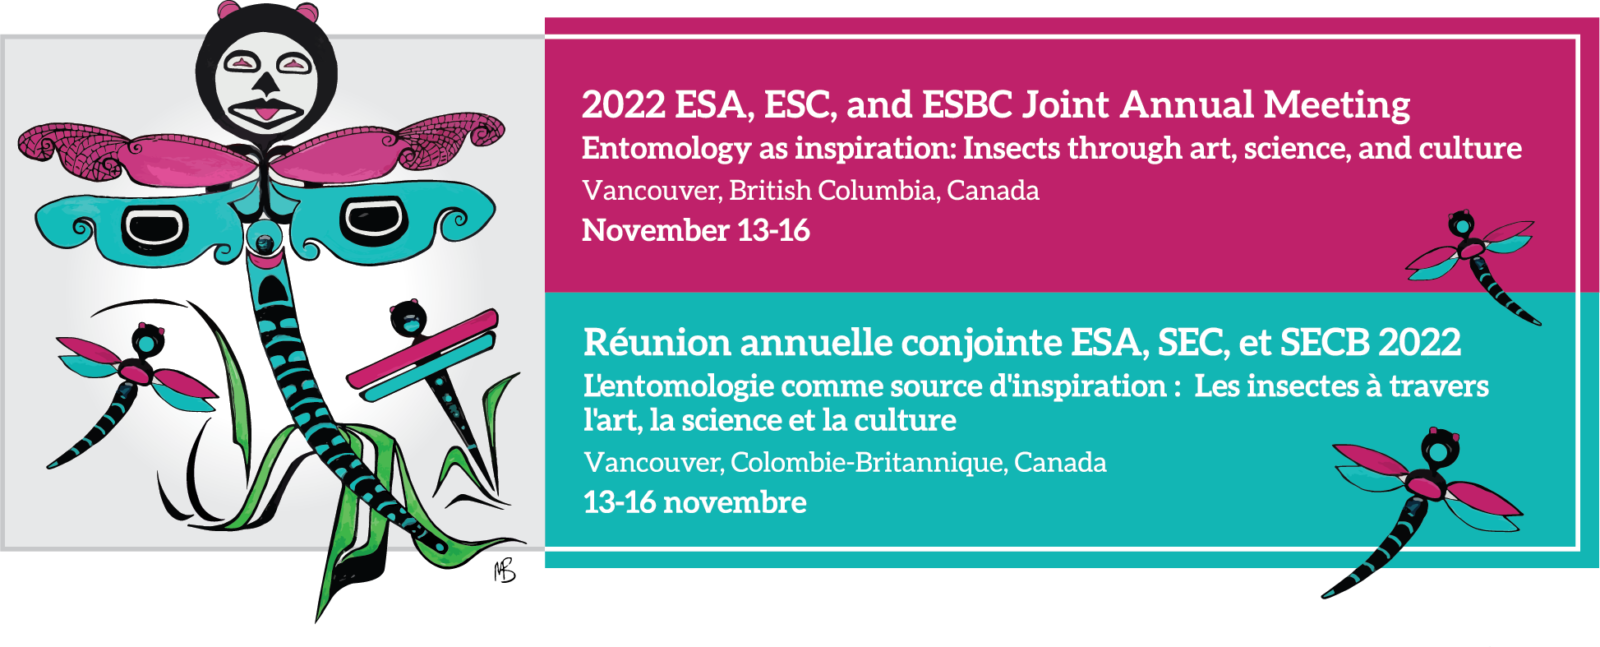 ESA, ESC, and ESBC Joint Annual Meeting 2022 Royal Entomological Society